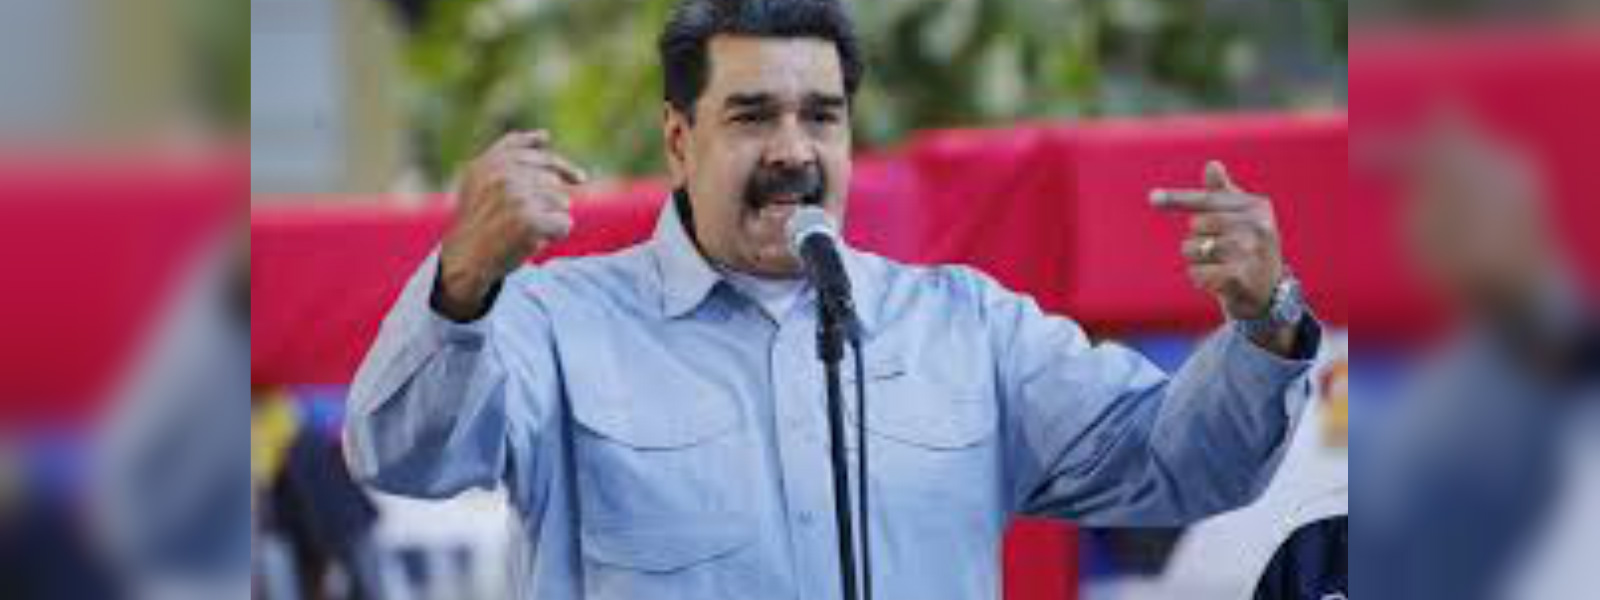 Maduro calls Trump's speech "nazi-style"